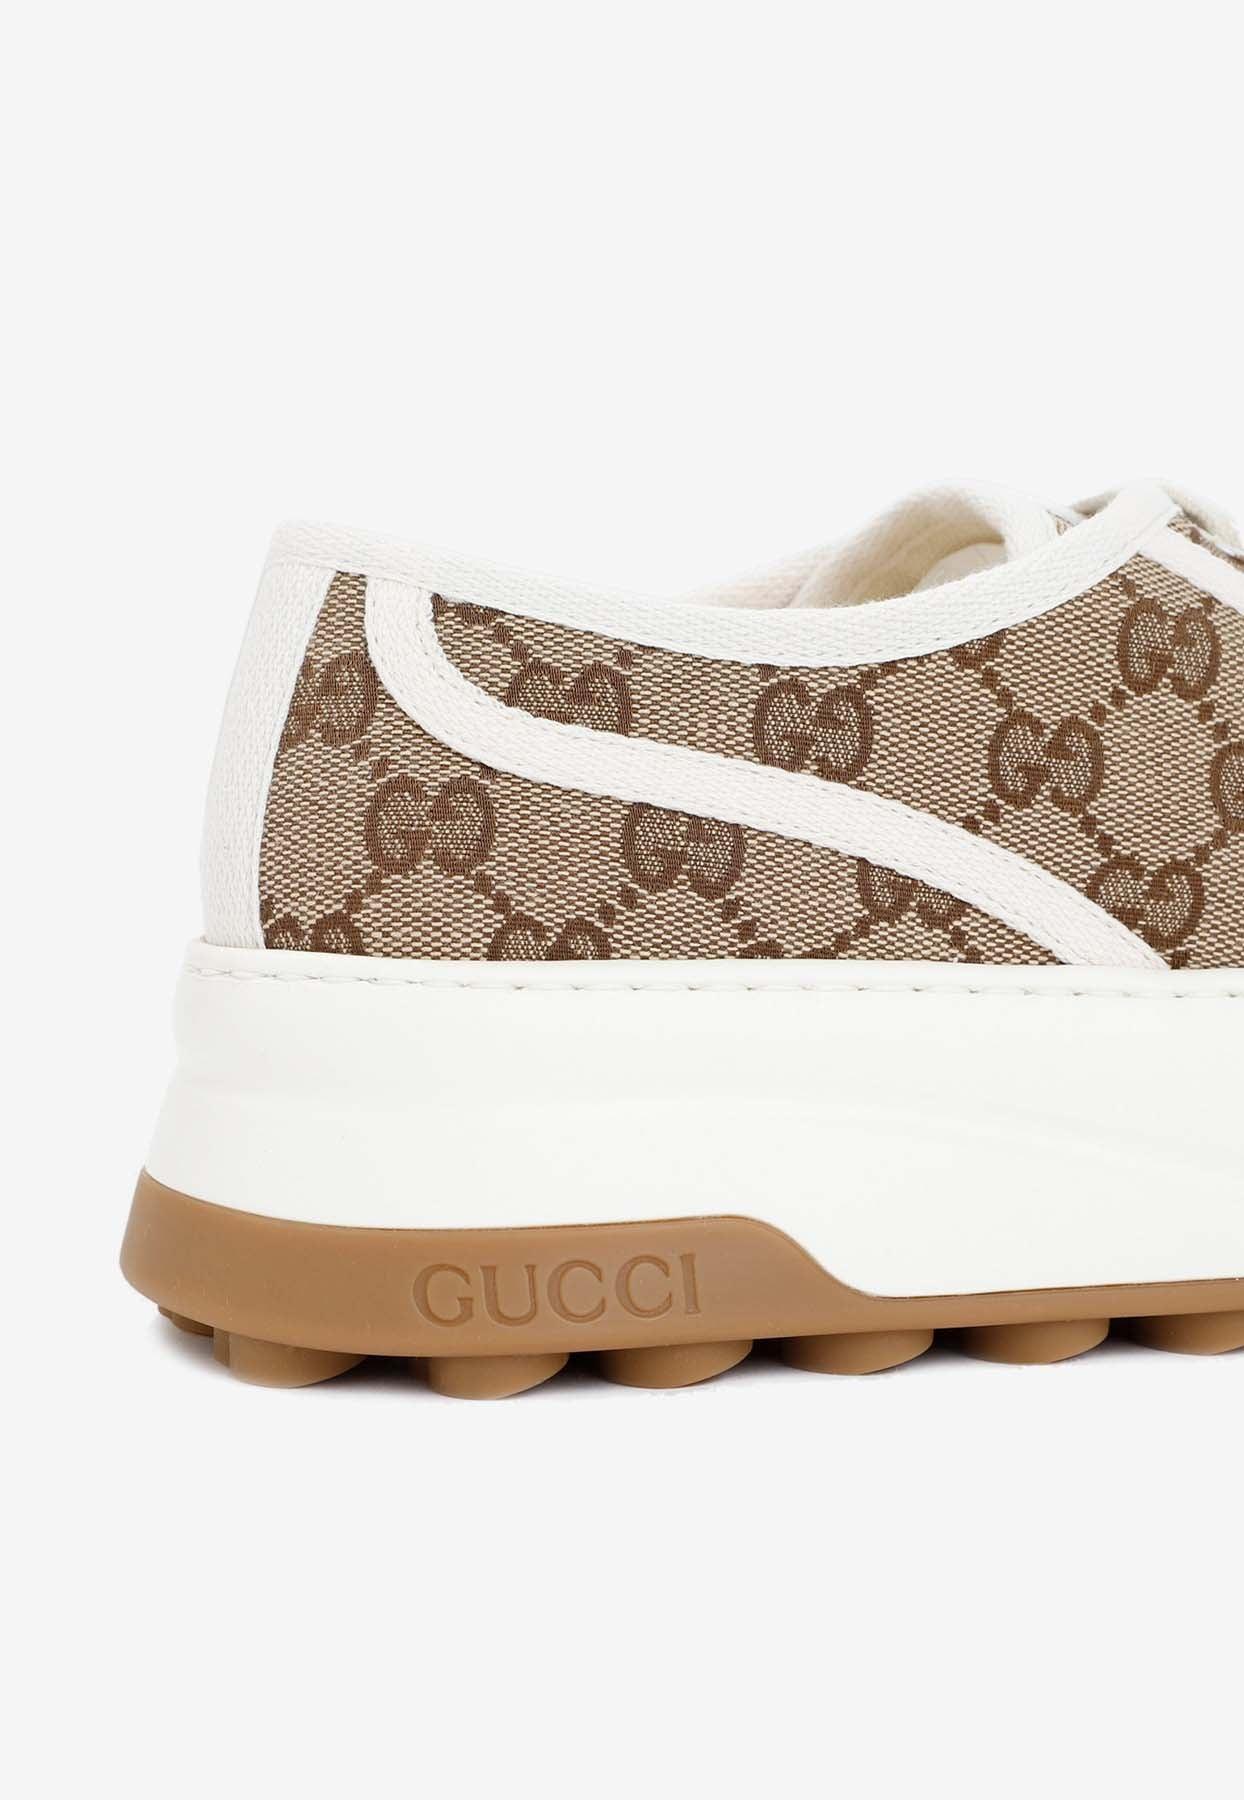 Infant Gucci flats size 16 - Girls shoes